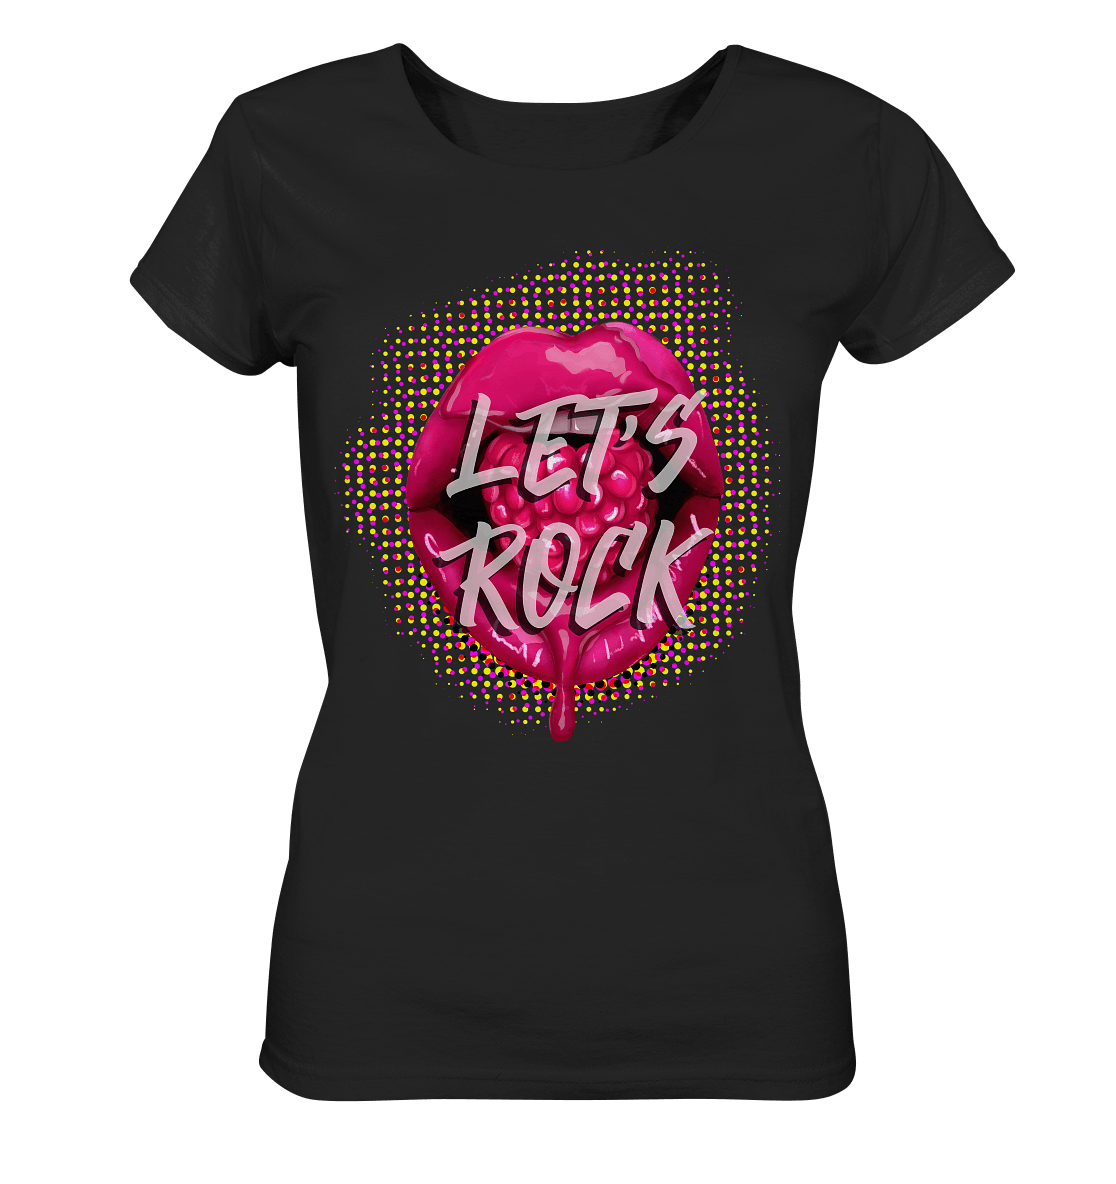 Lets-Rock-sexy-Lips-Pop-Damen-T-Shirt-in-schwarz-mit-Lippen